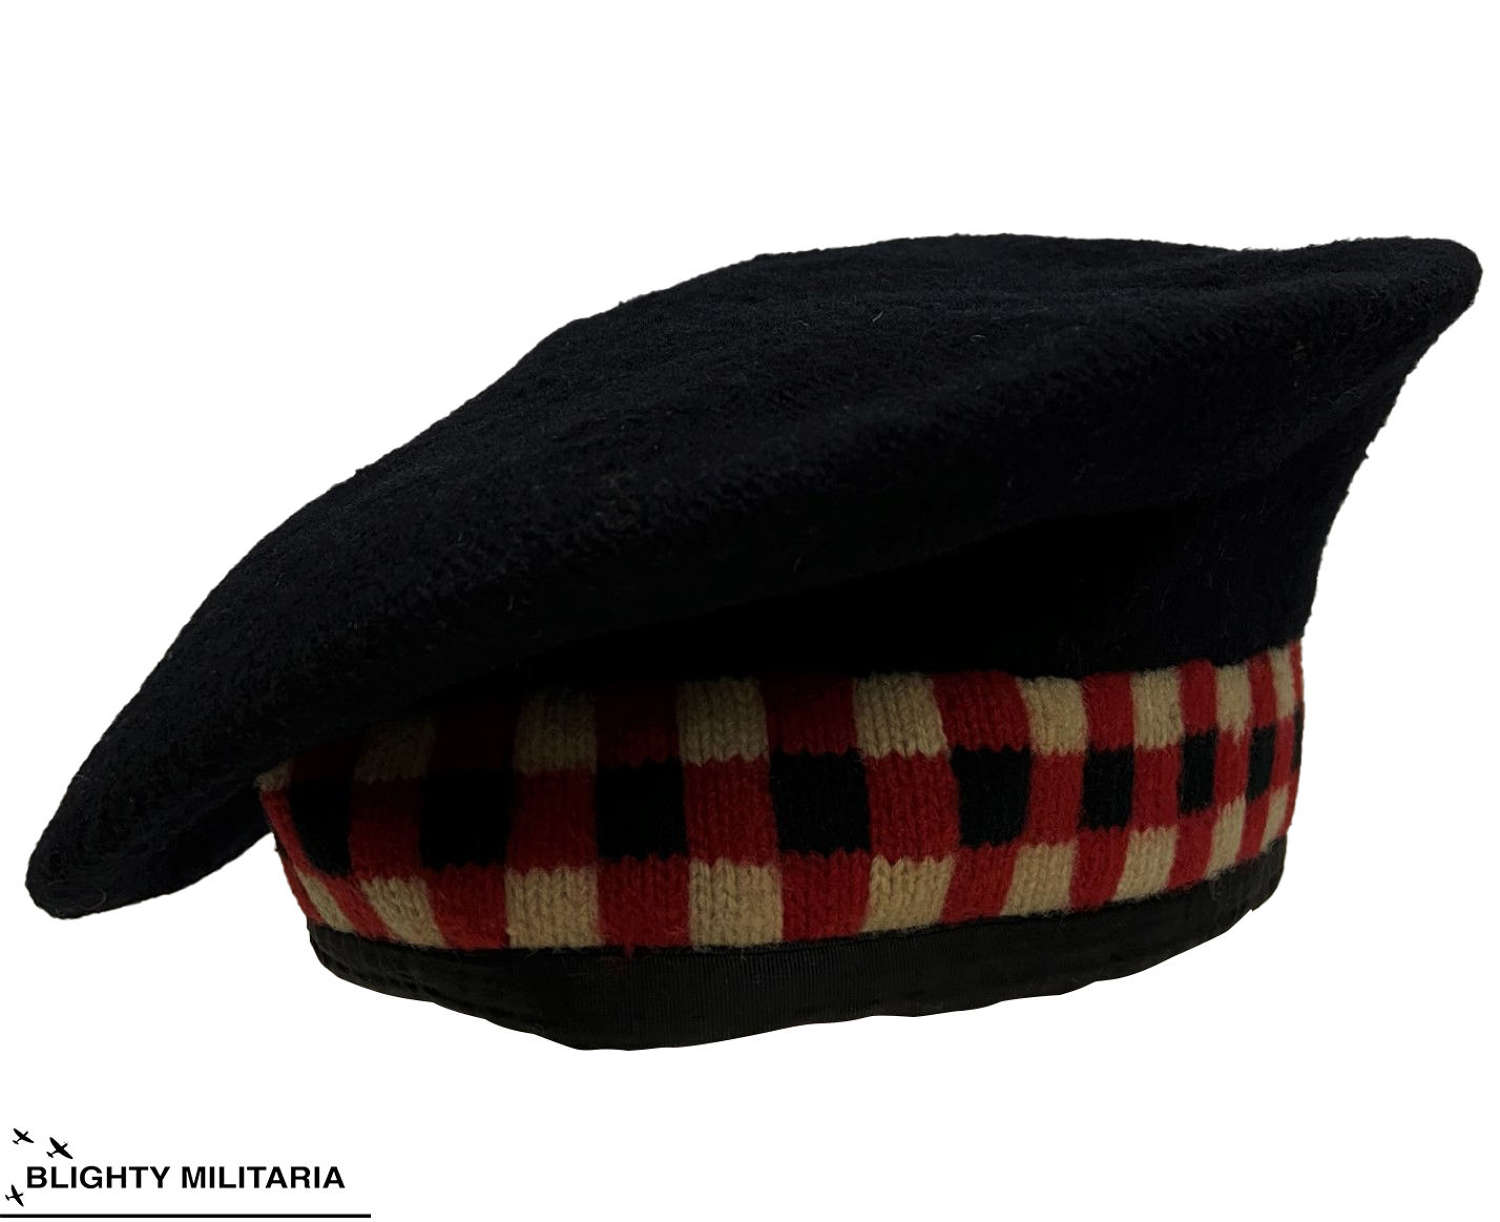 Original 1955 Dated Scottish Military Balmoral Bonnet - Size 7 1/8